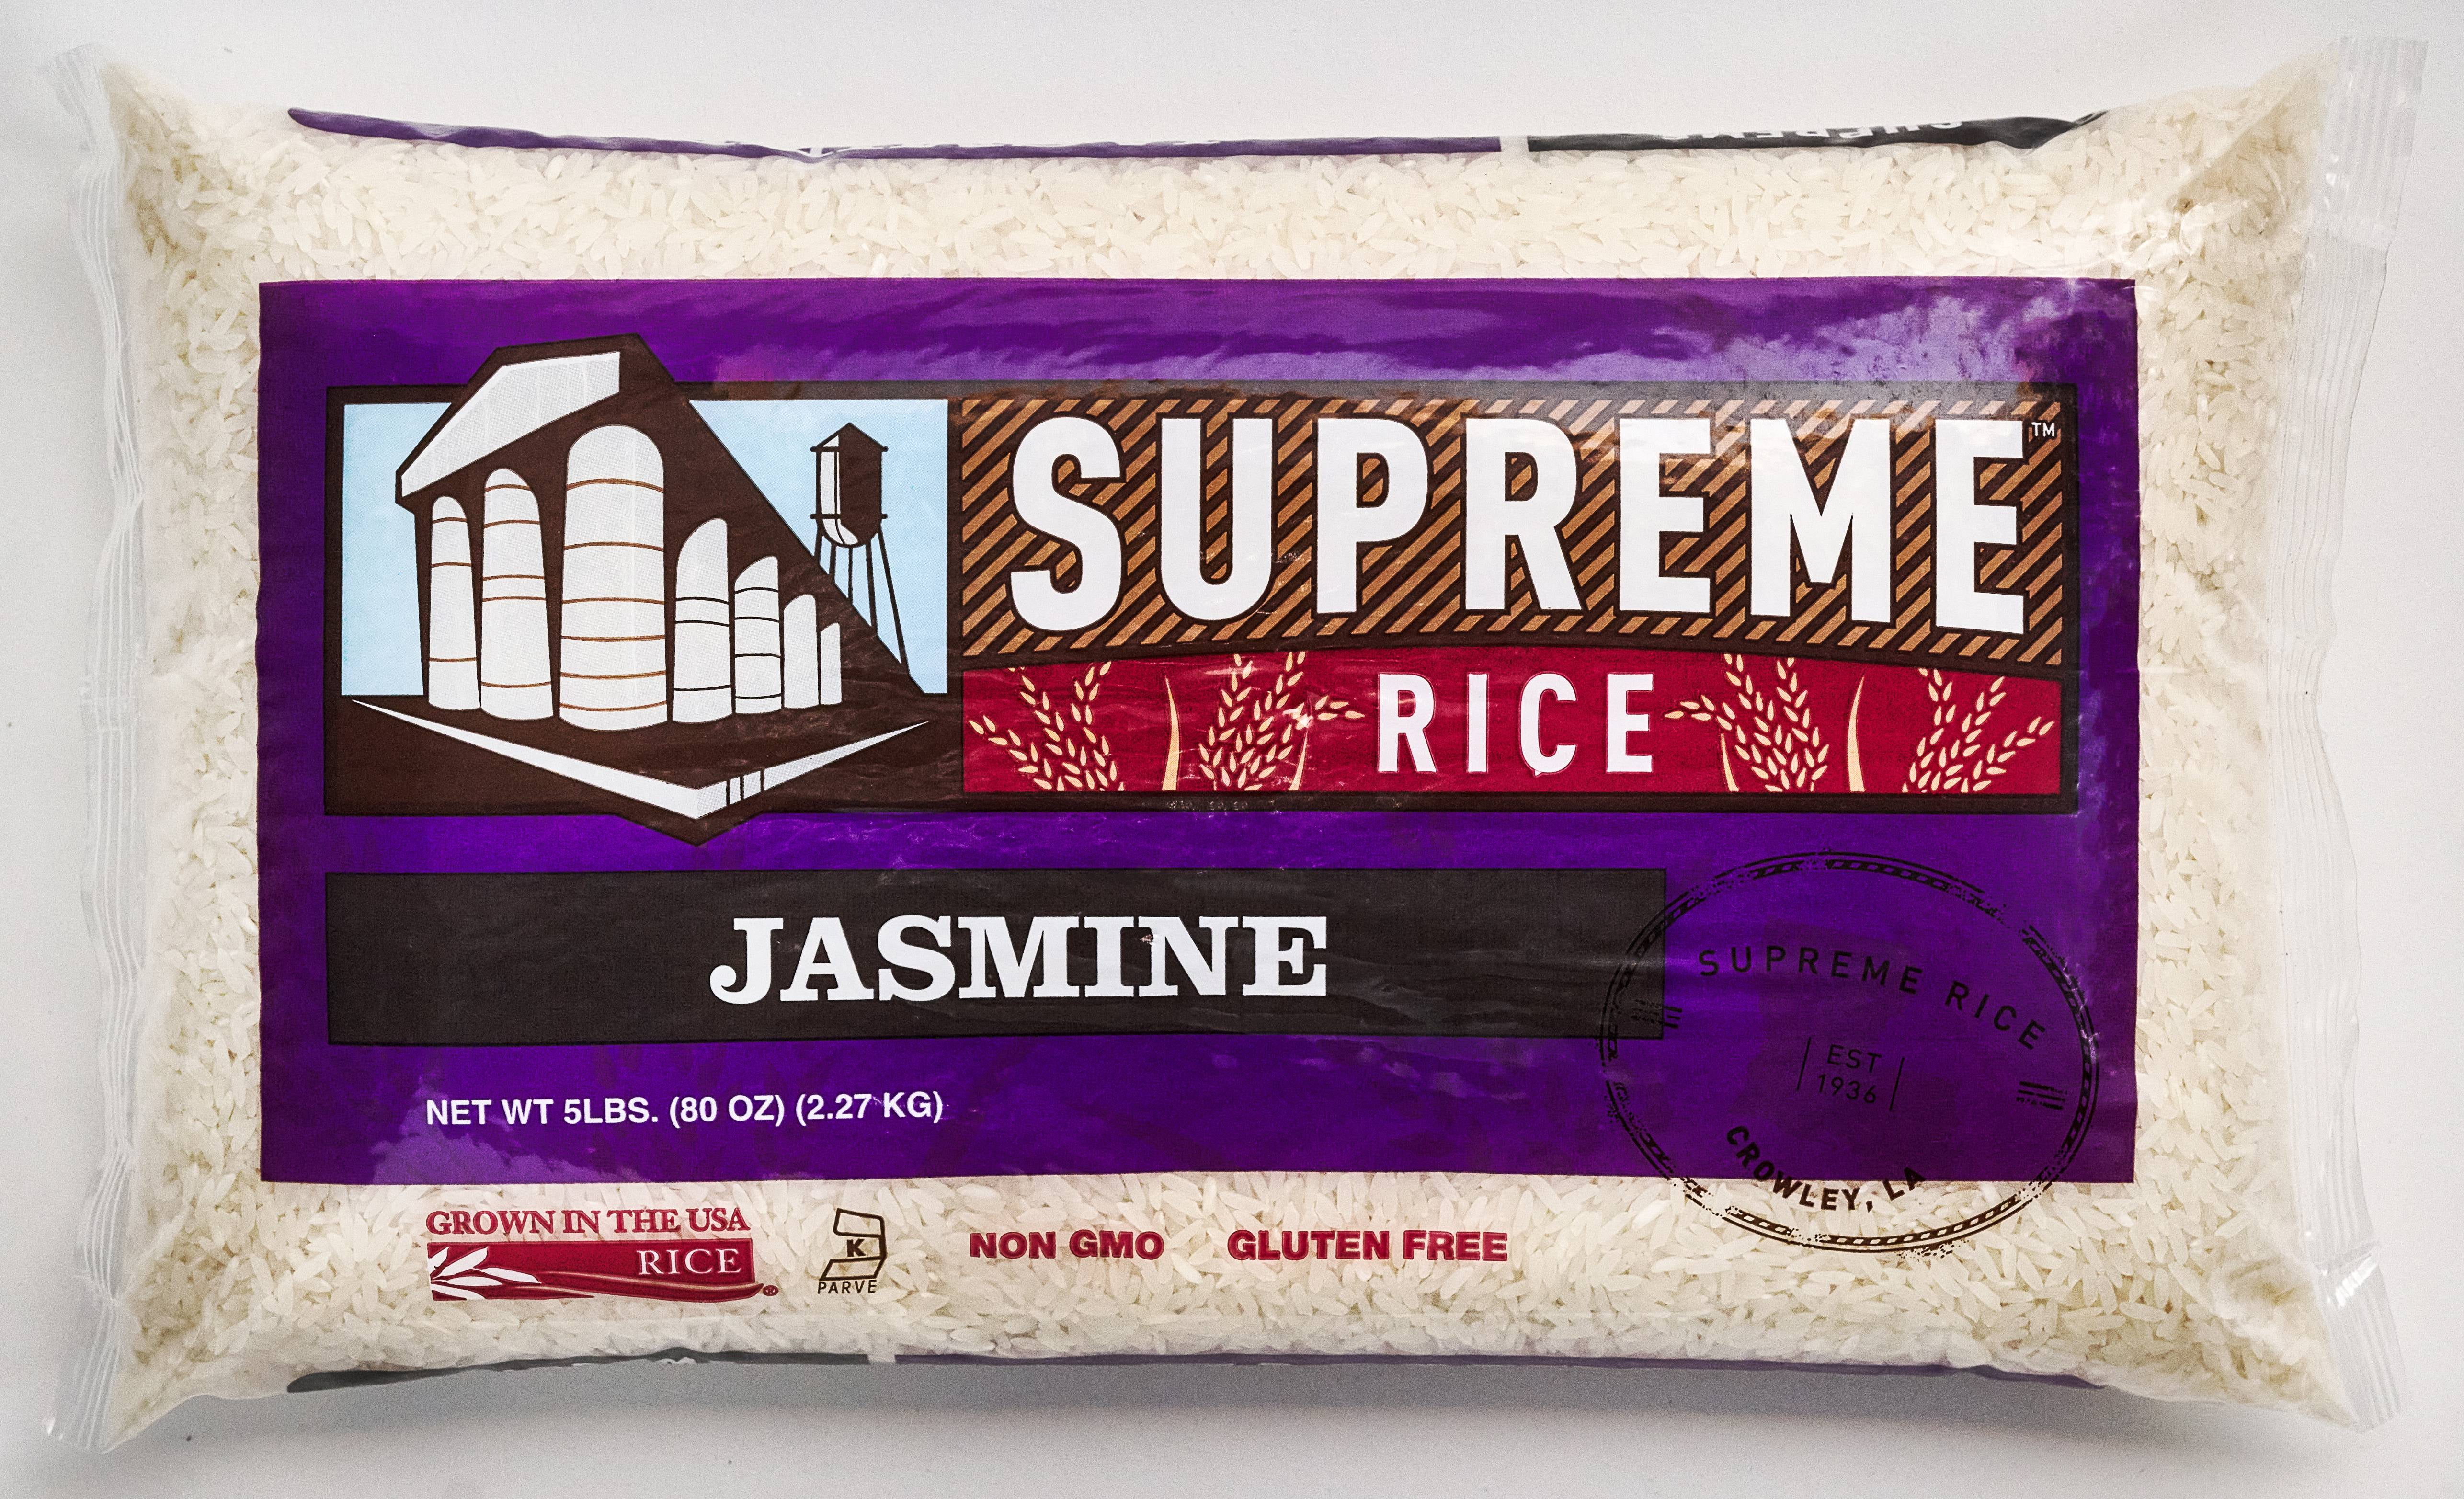 Supreme Rice White Rice, Aromatic Louisiana Jasmine